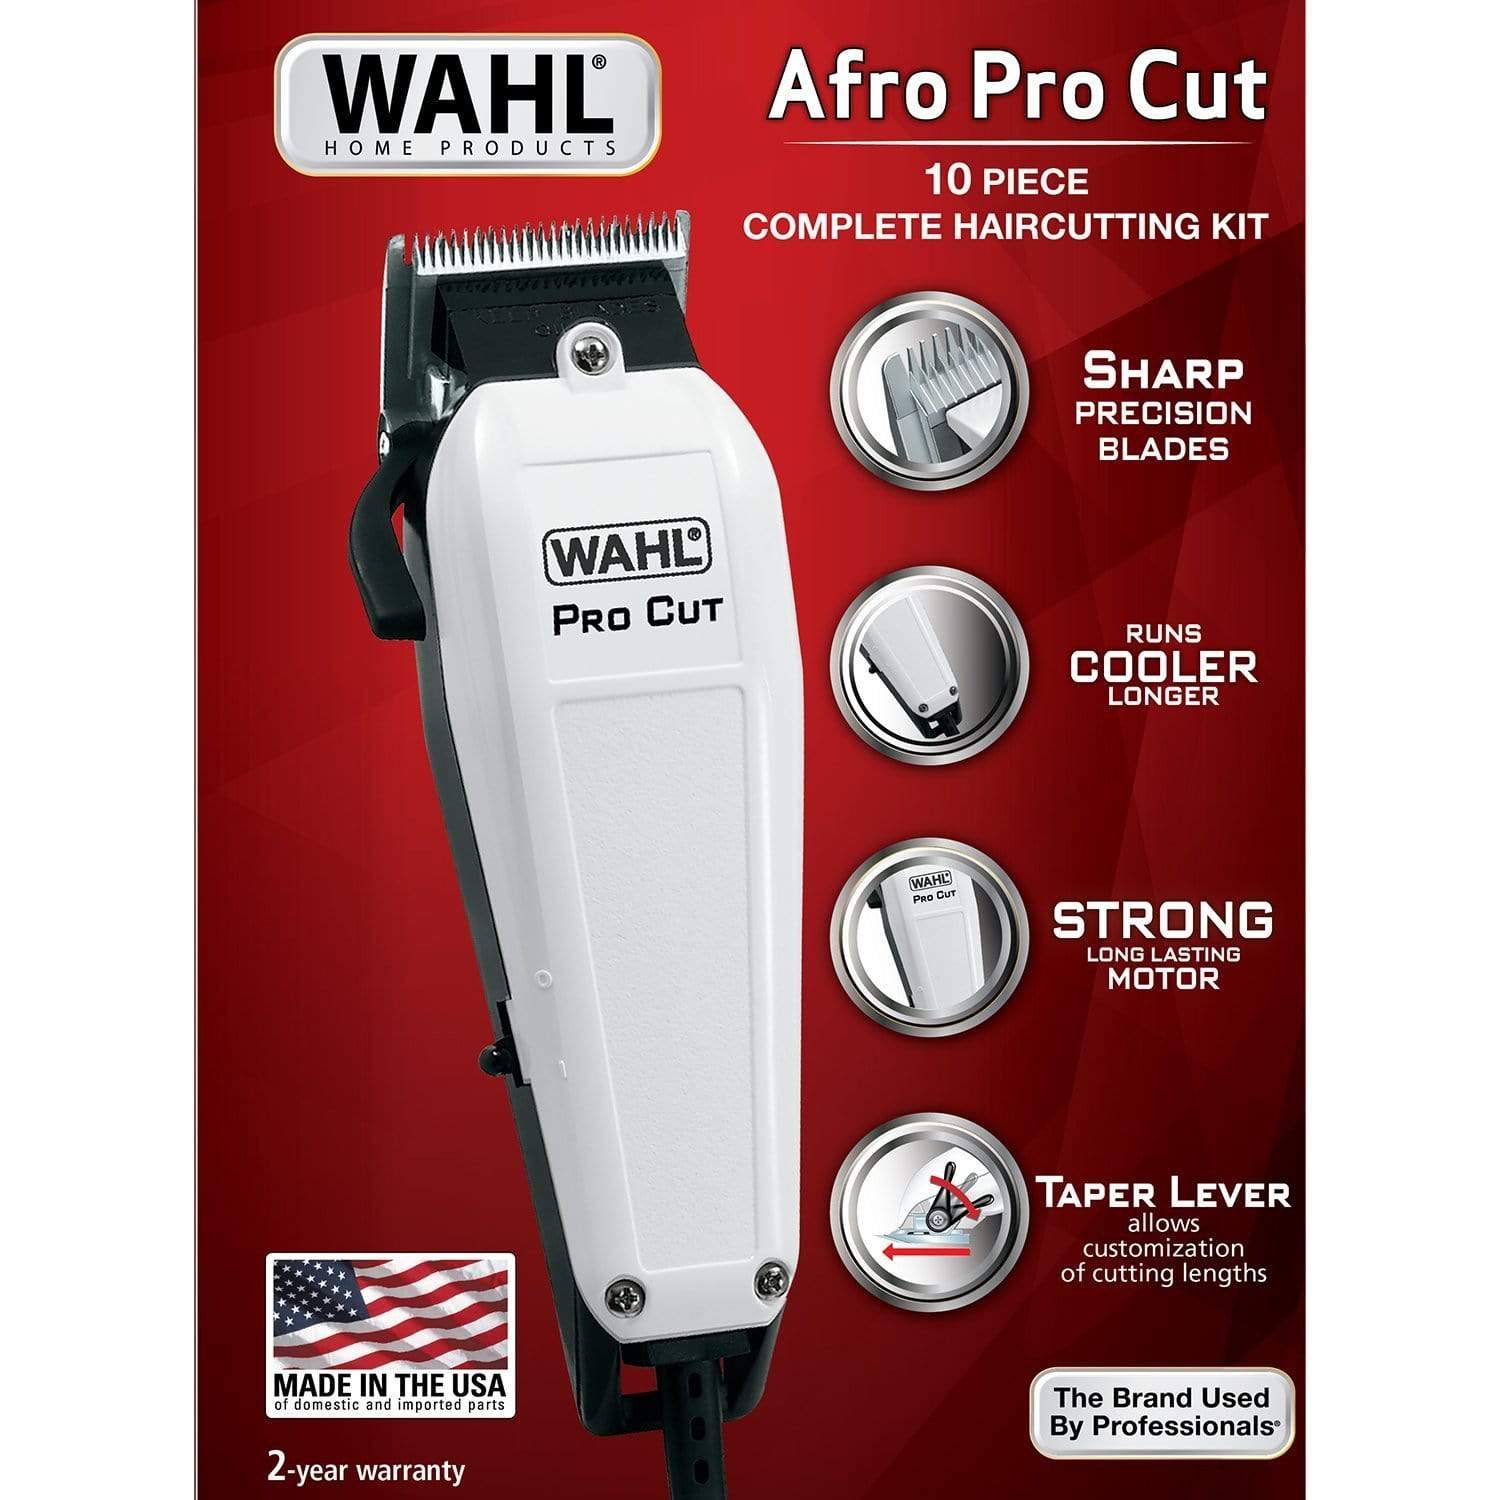 WAHL AFRO PROCUT HAIR CLIPPER - 9247-1627